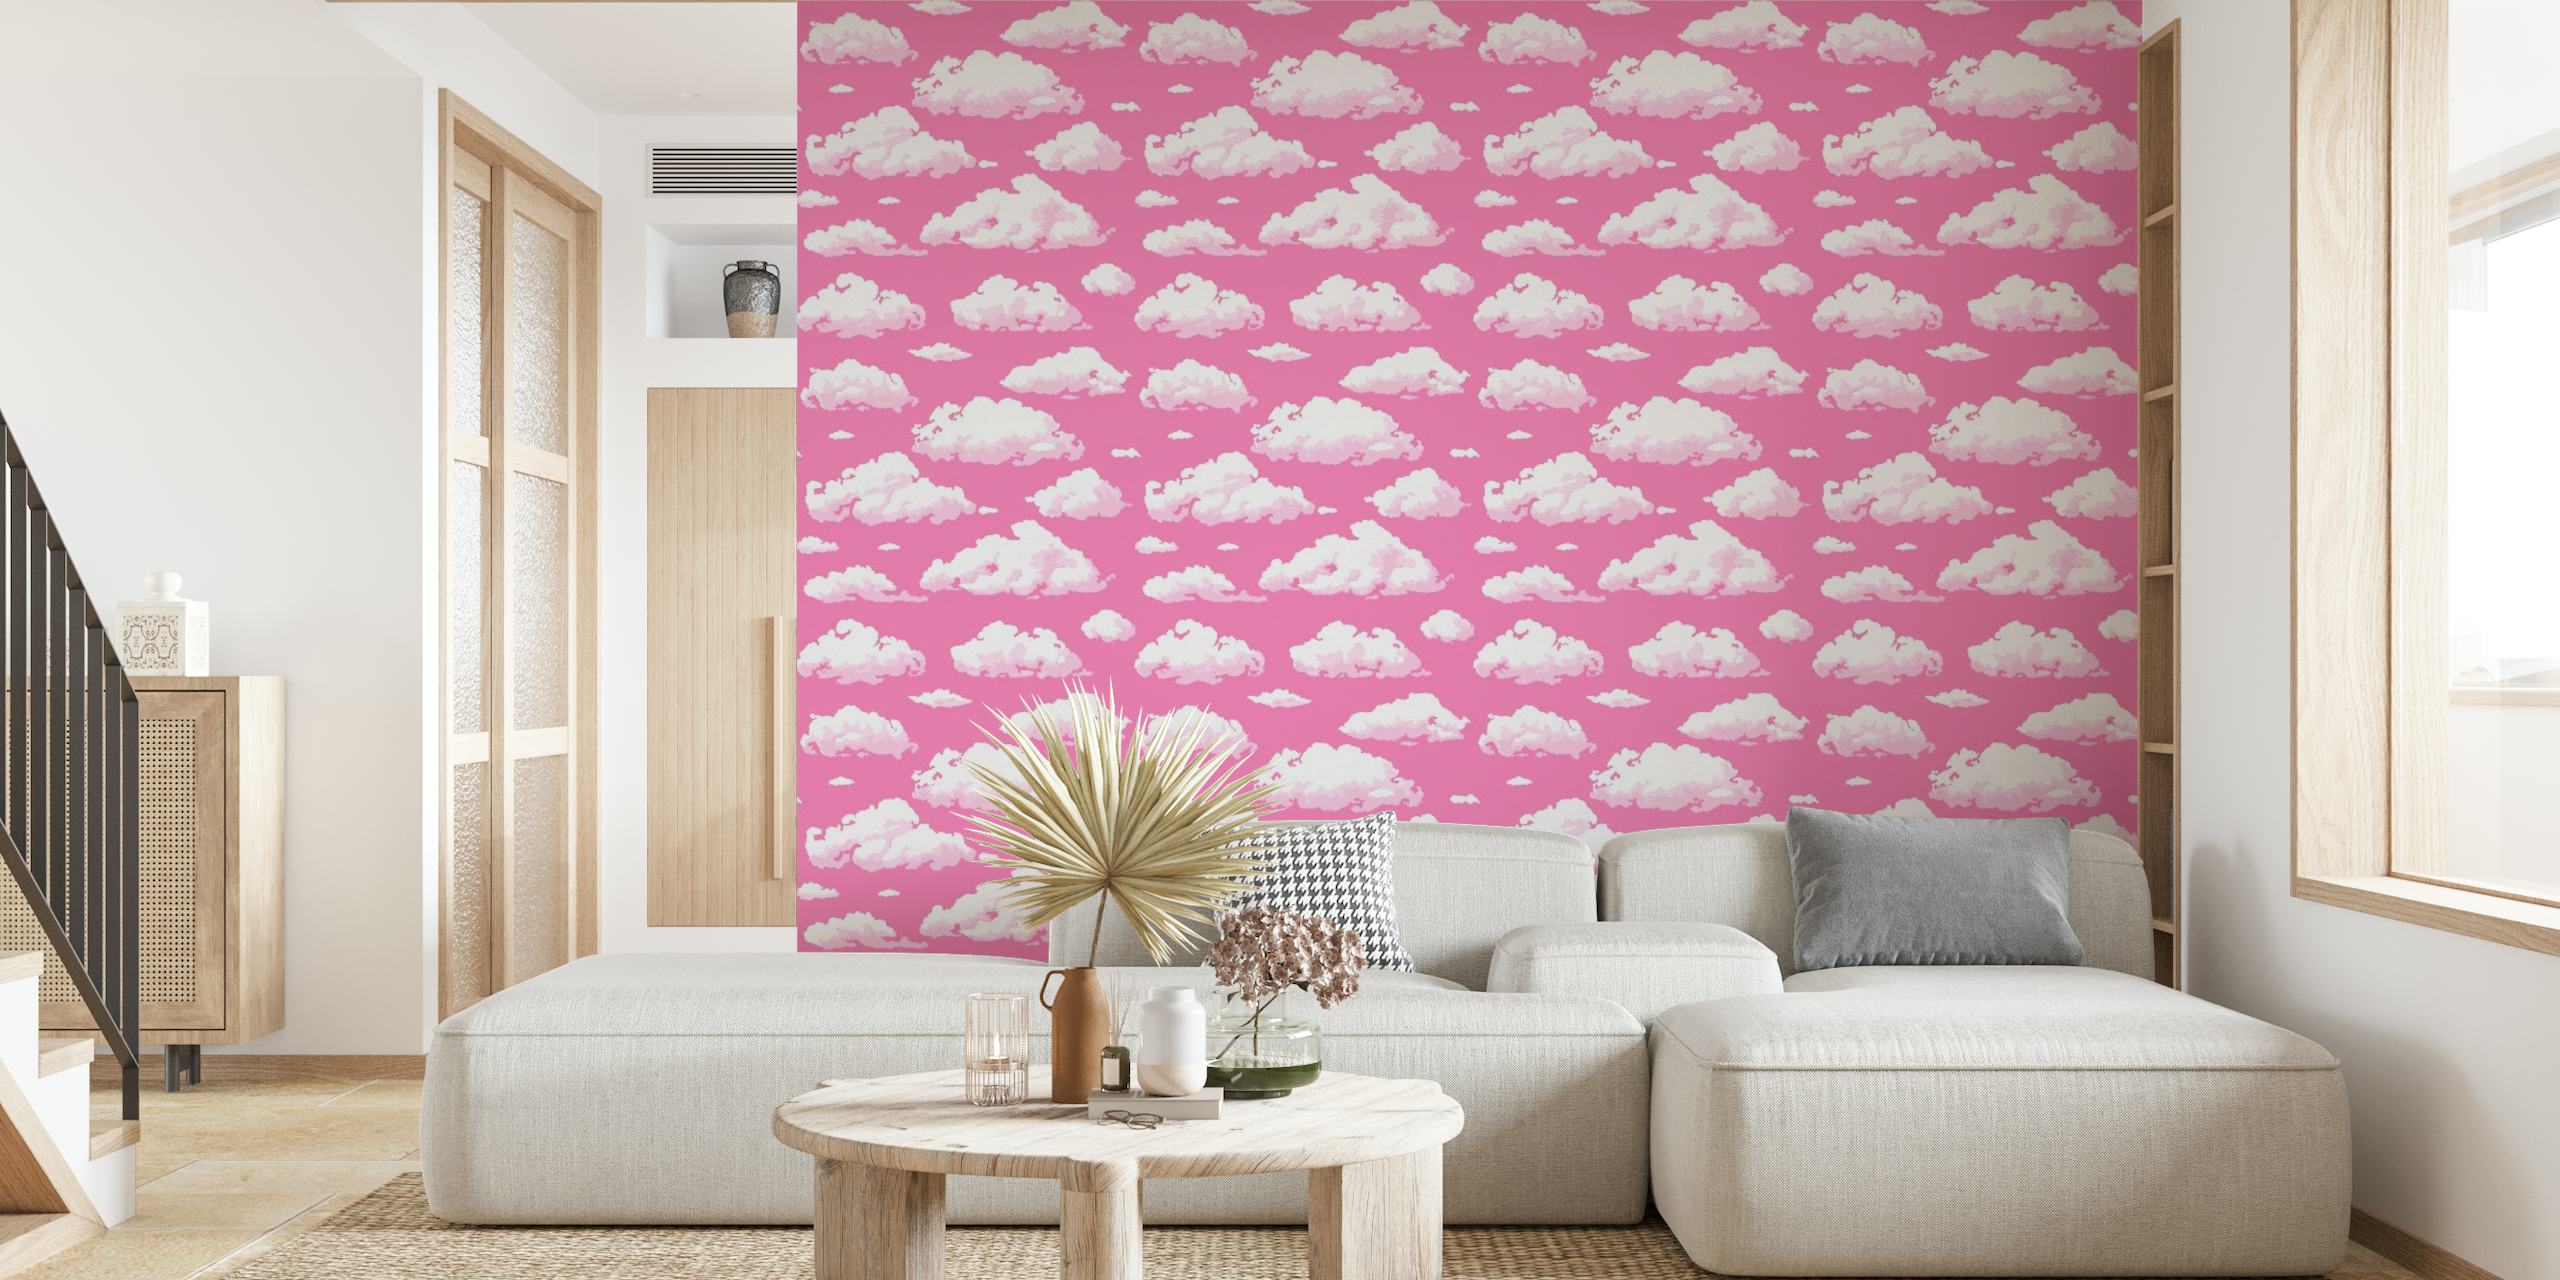 Cloudy sky on pink behang